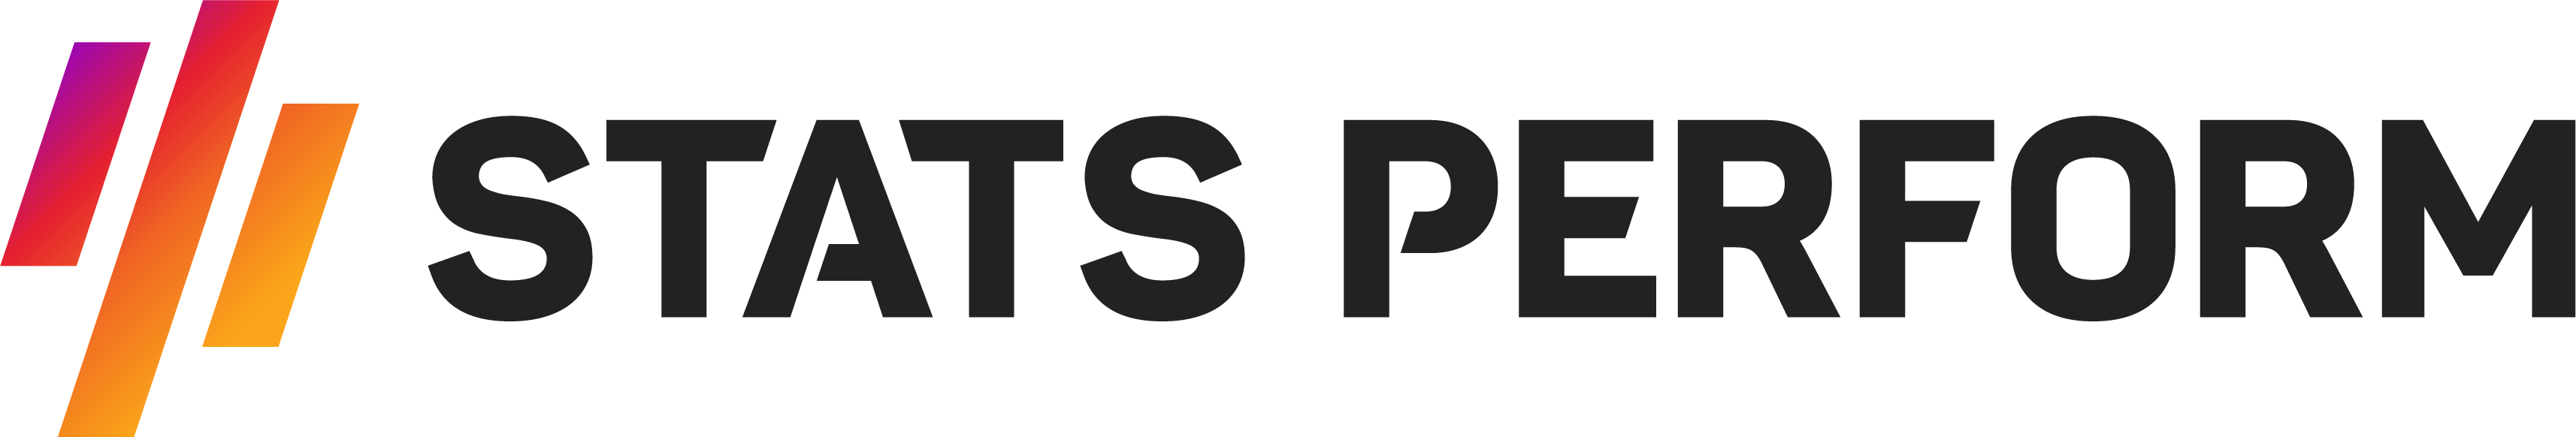 StatsPerform_Logo_Secondary_01.png